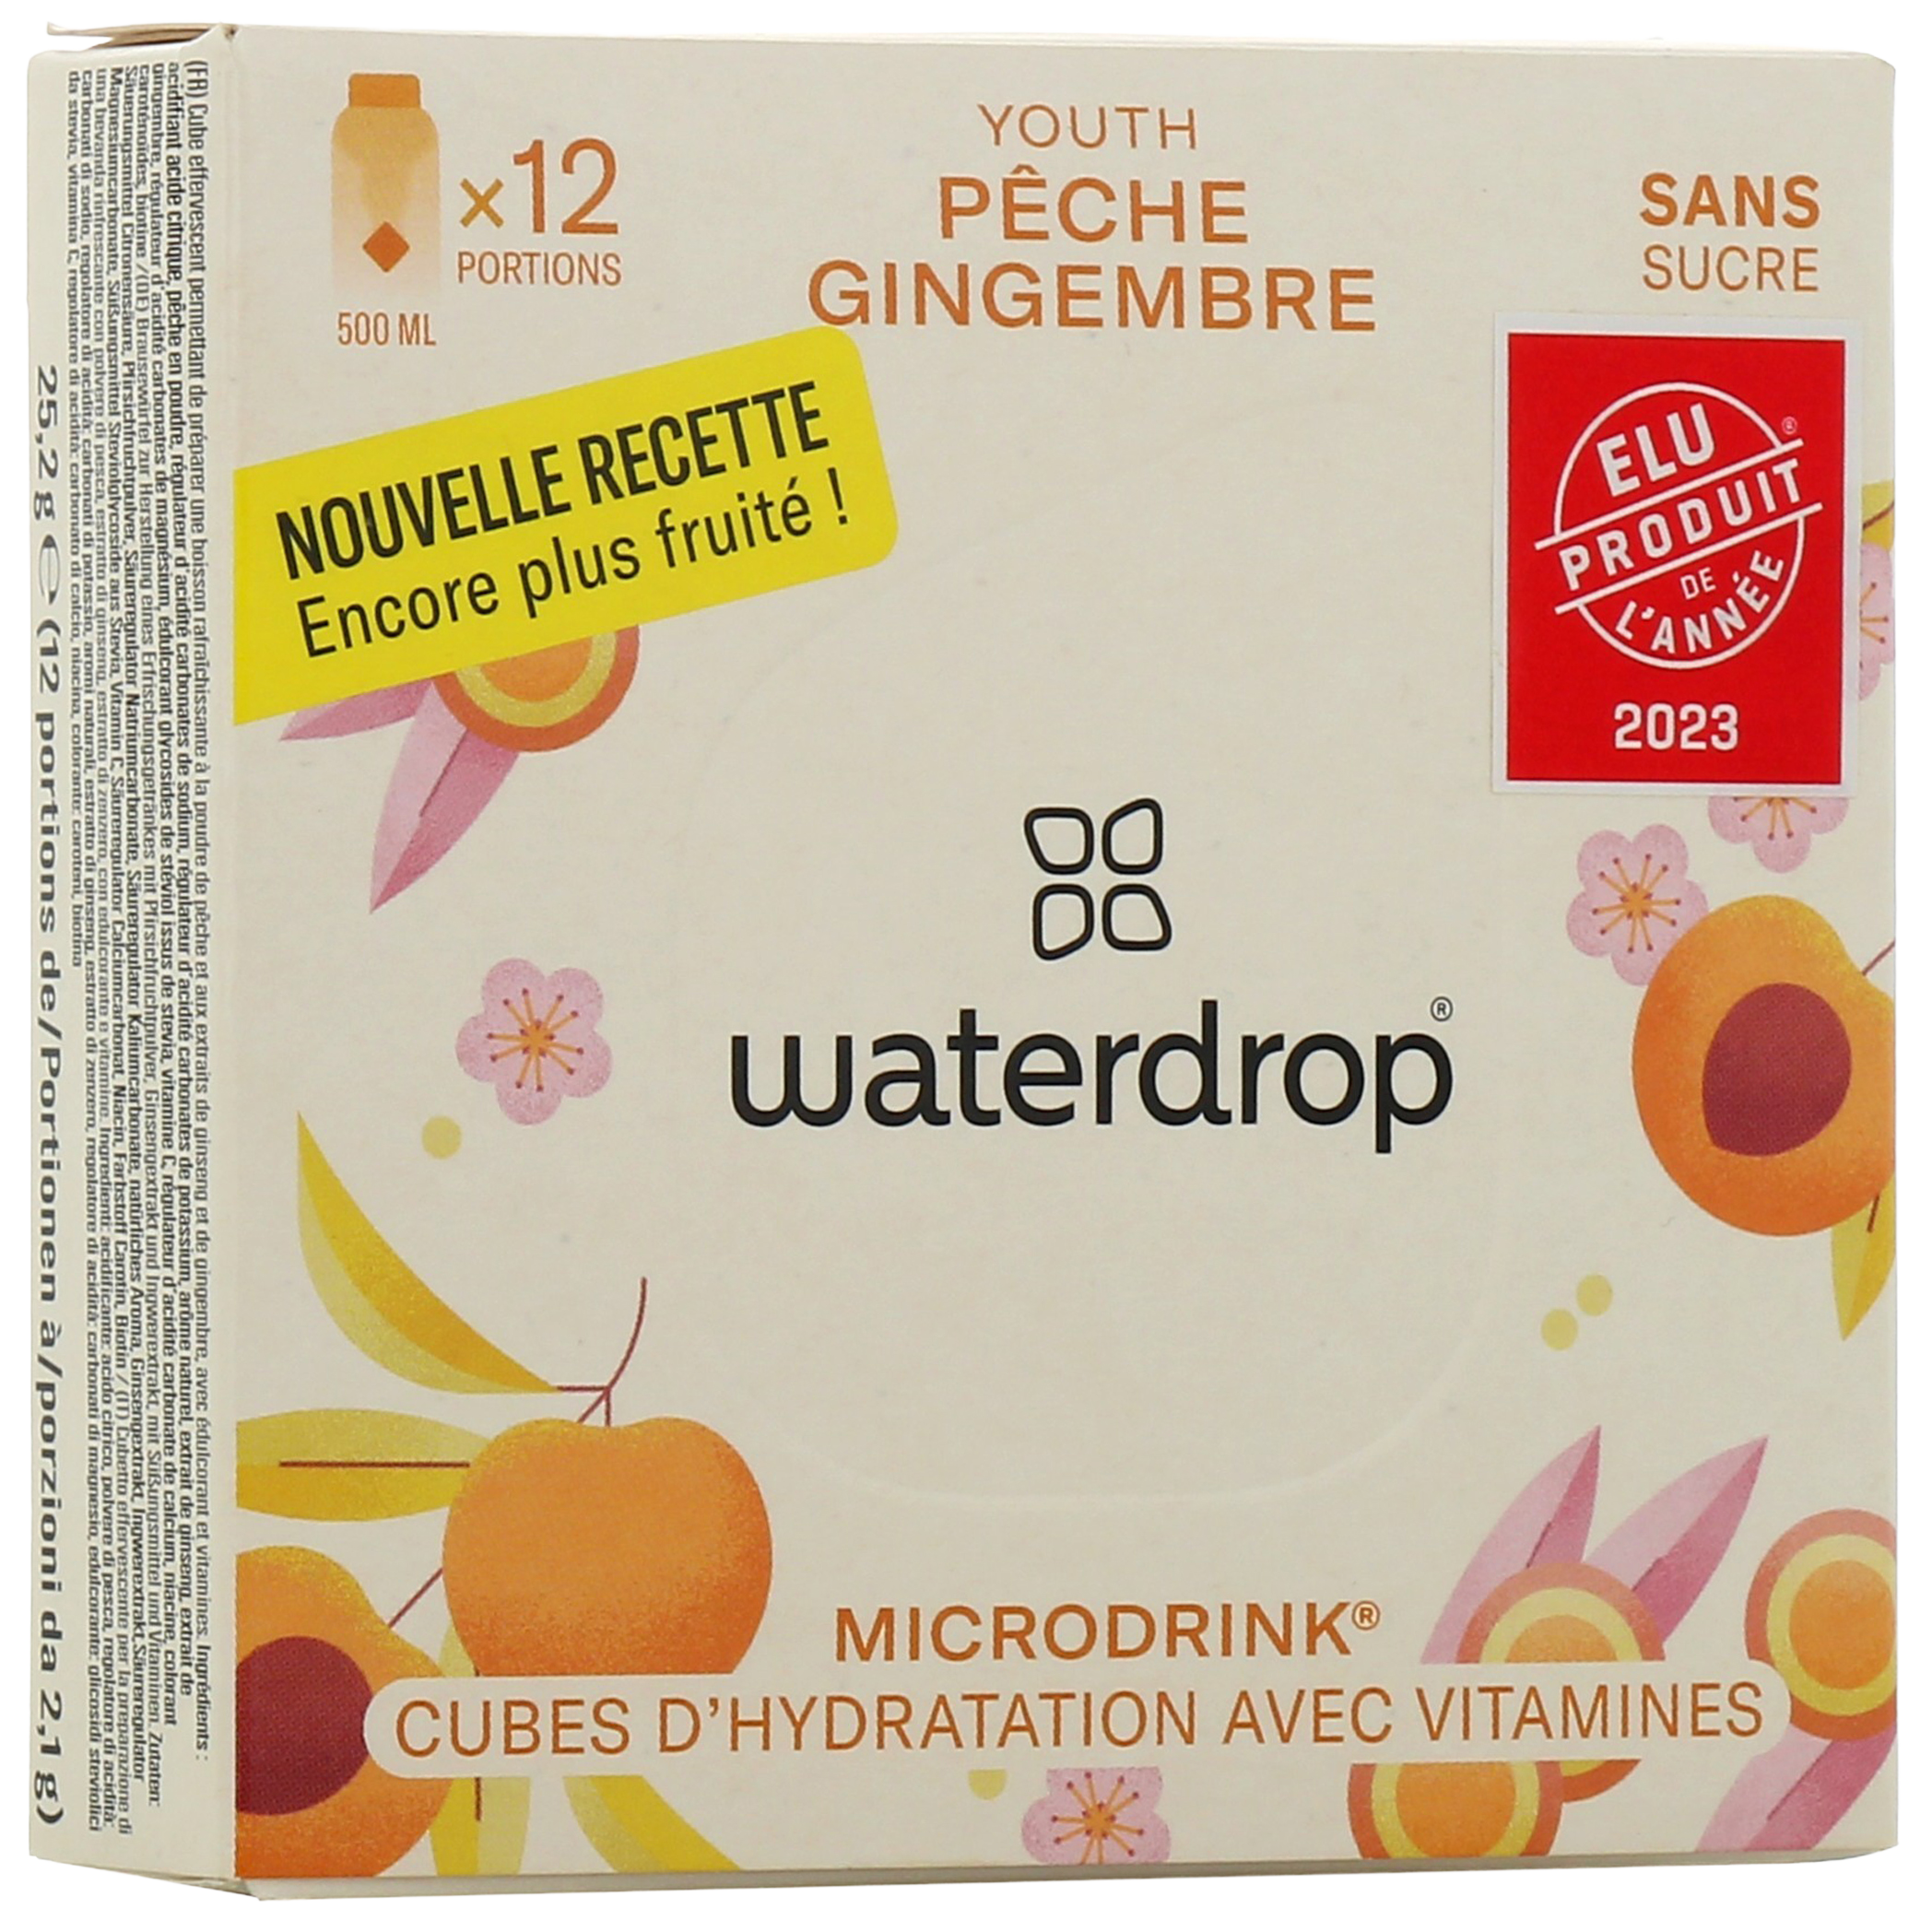 Waterdrop - Pharmacie de la Mauvendière